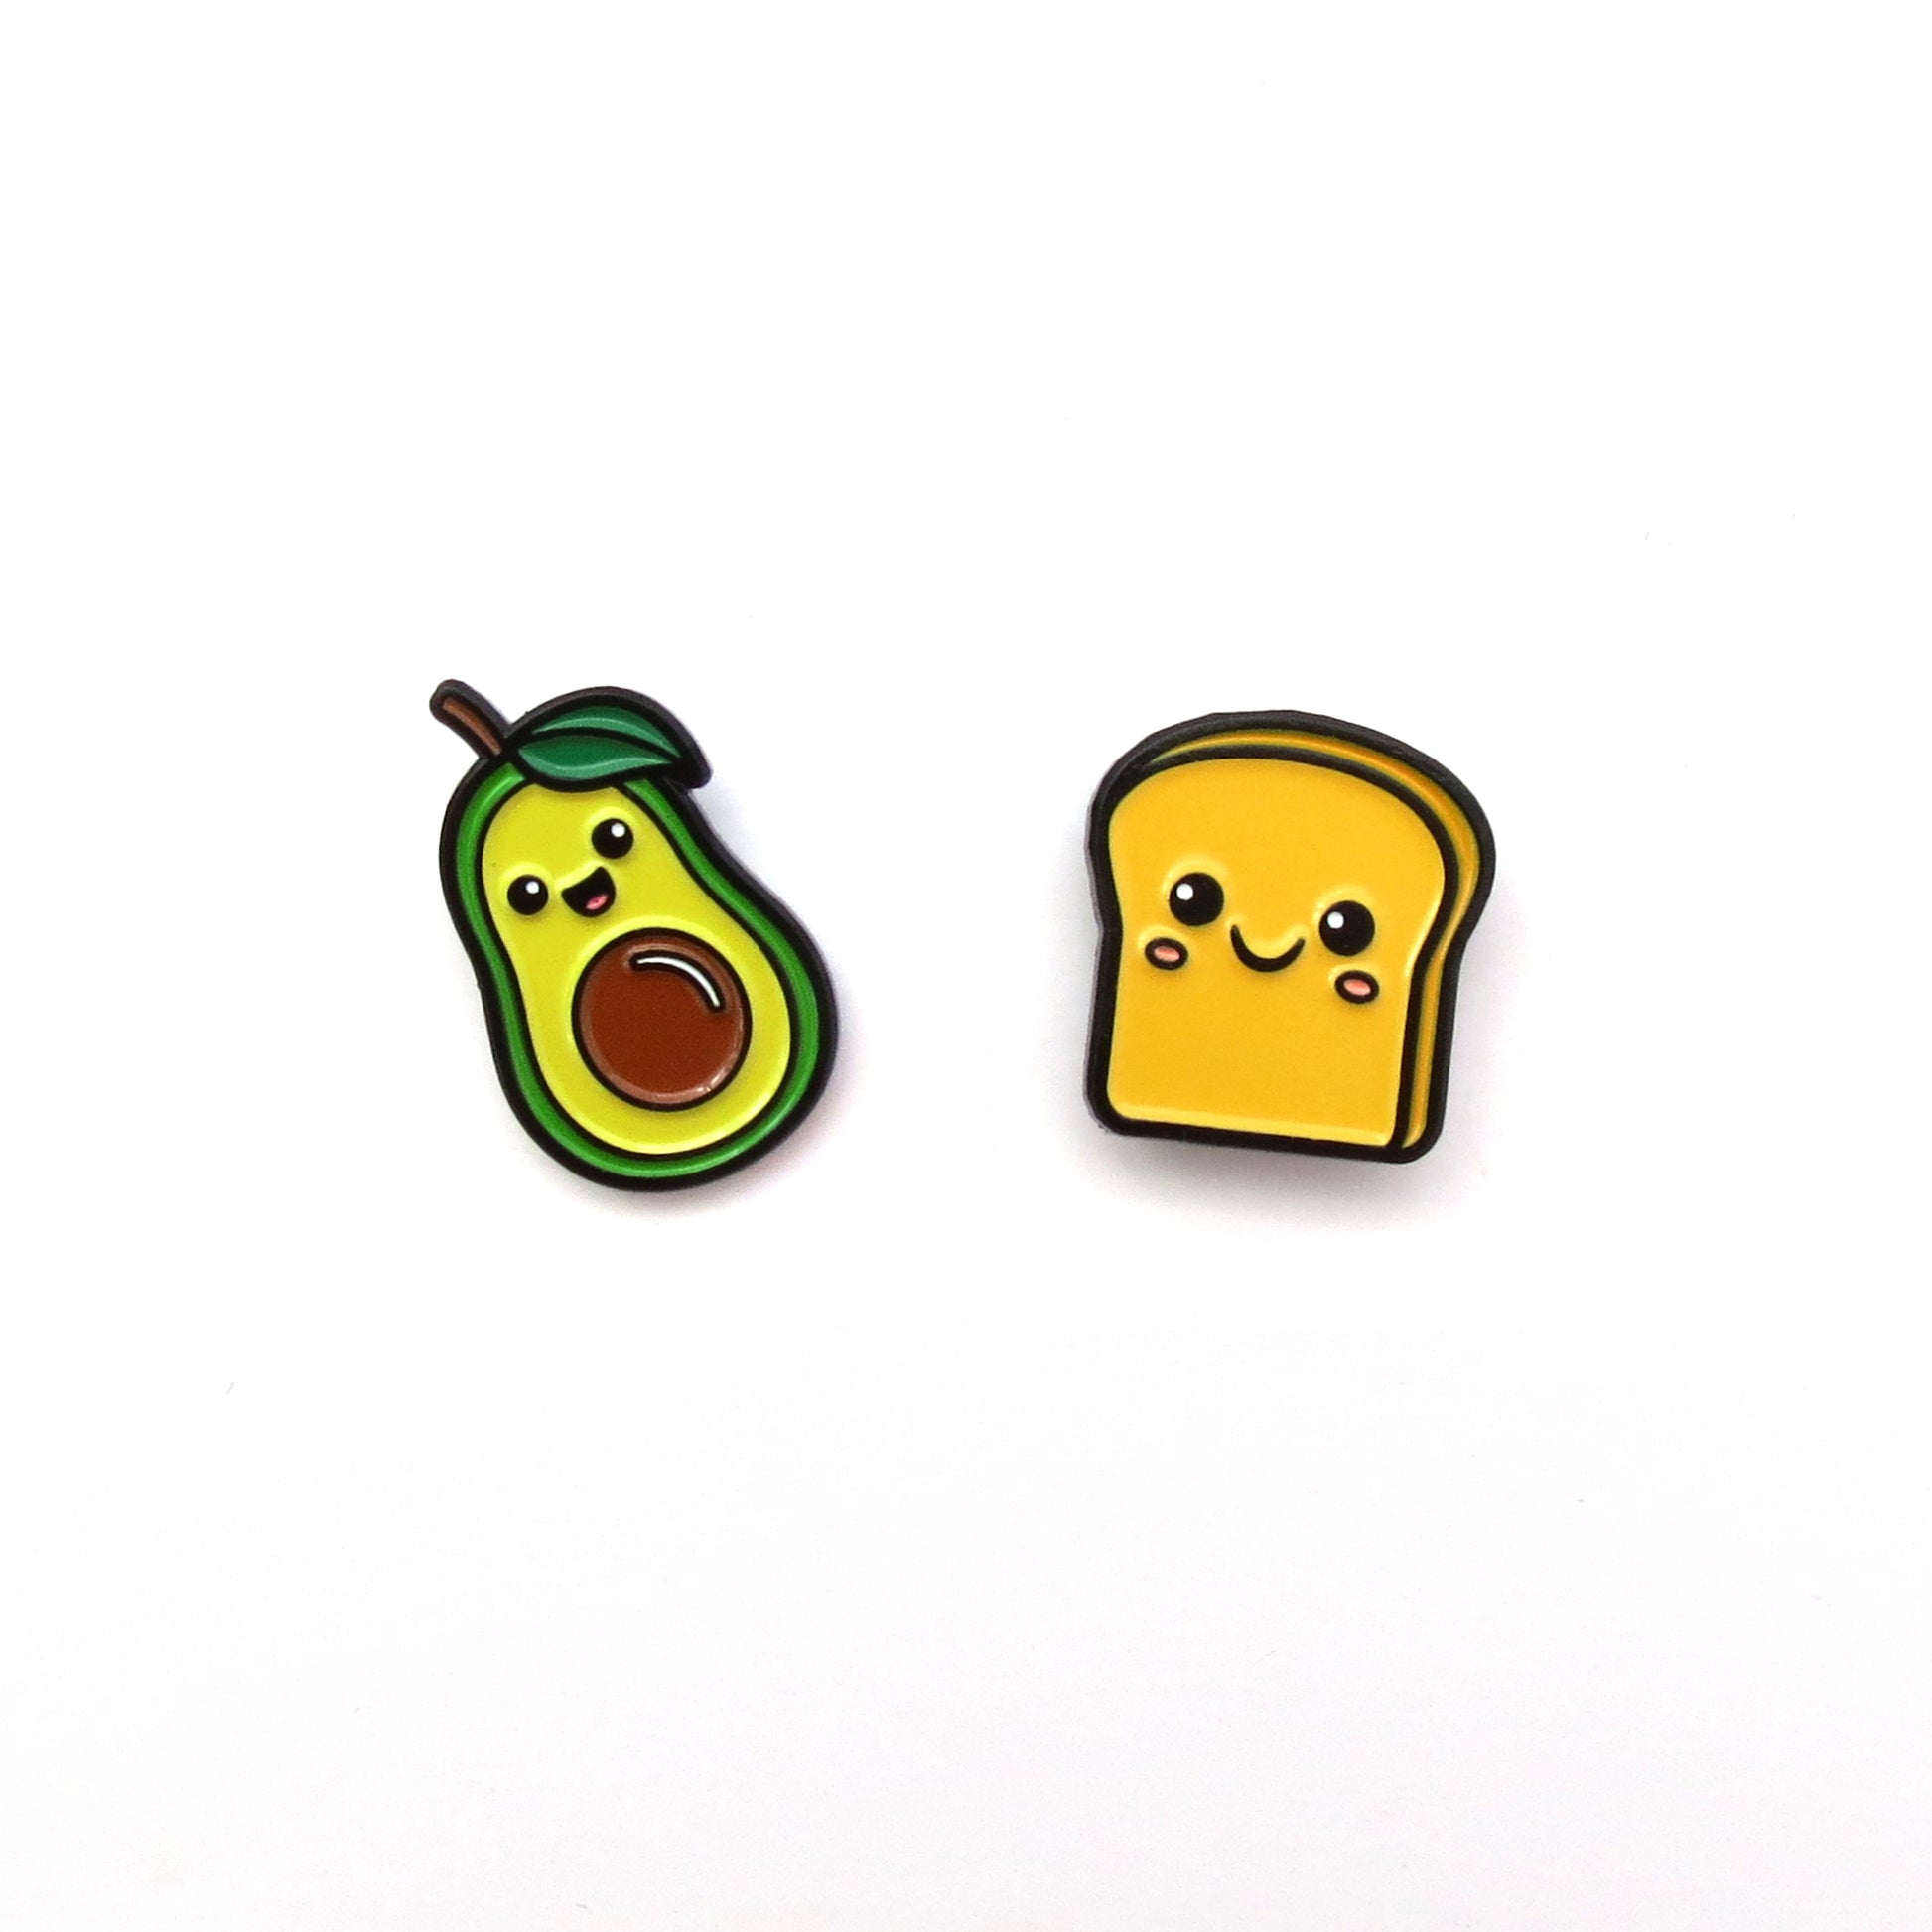 Avocado and Toast enamel pin set on white background